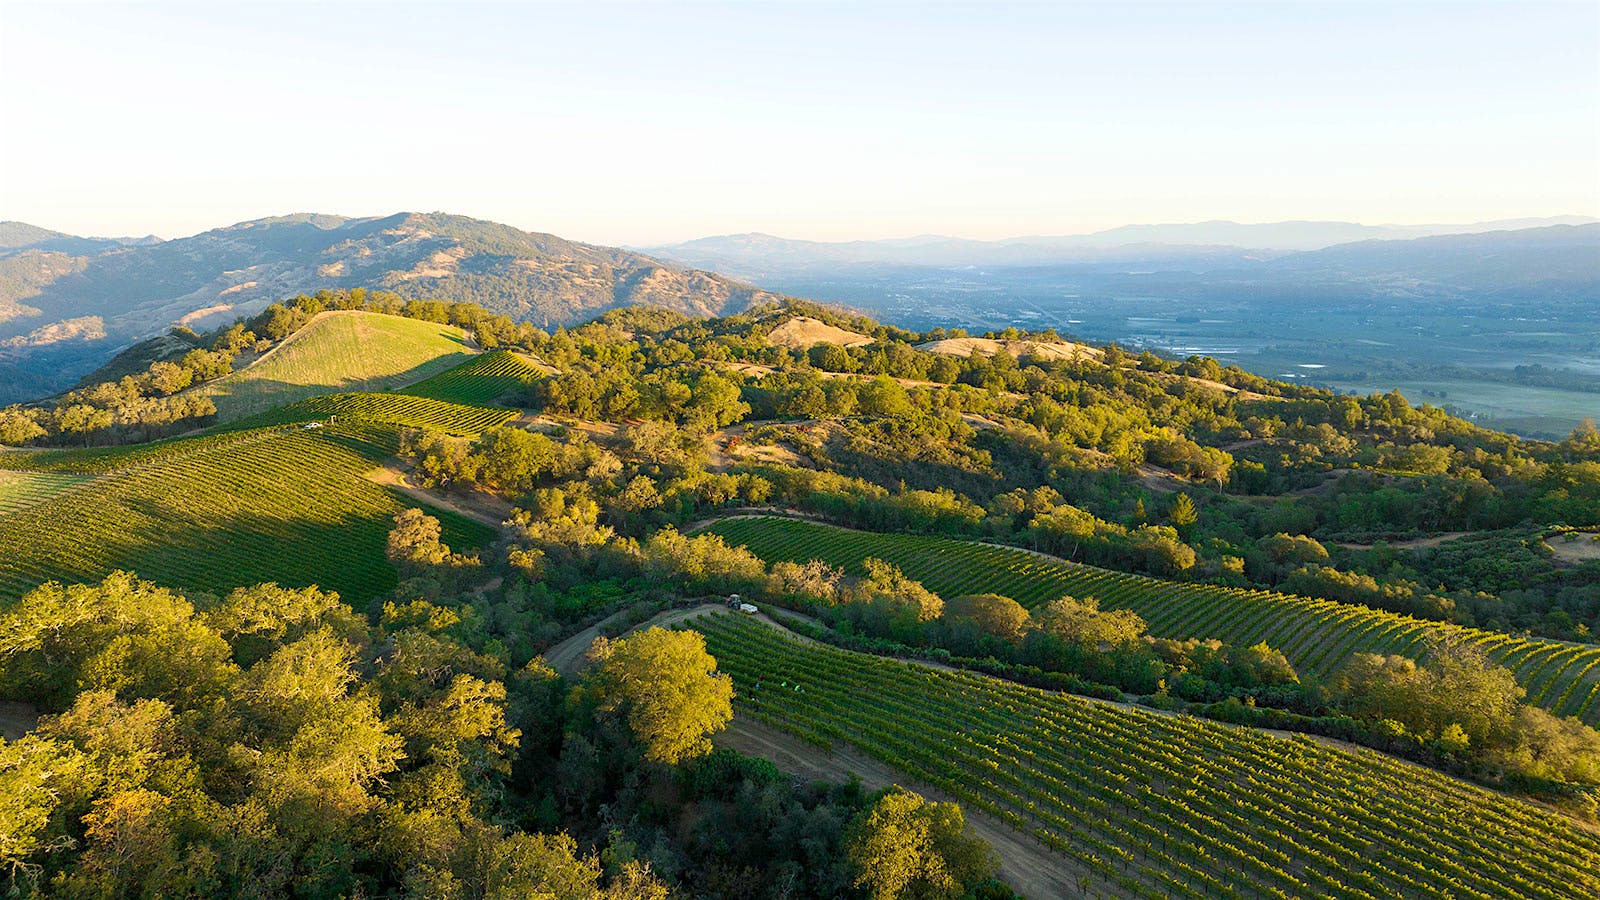 Bonterra Bets Big on Regenerative Farming with New Line of Eco-Friendly Wines